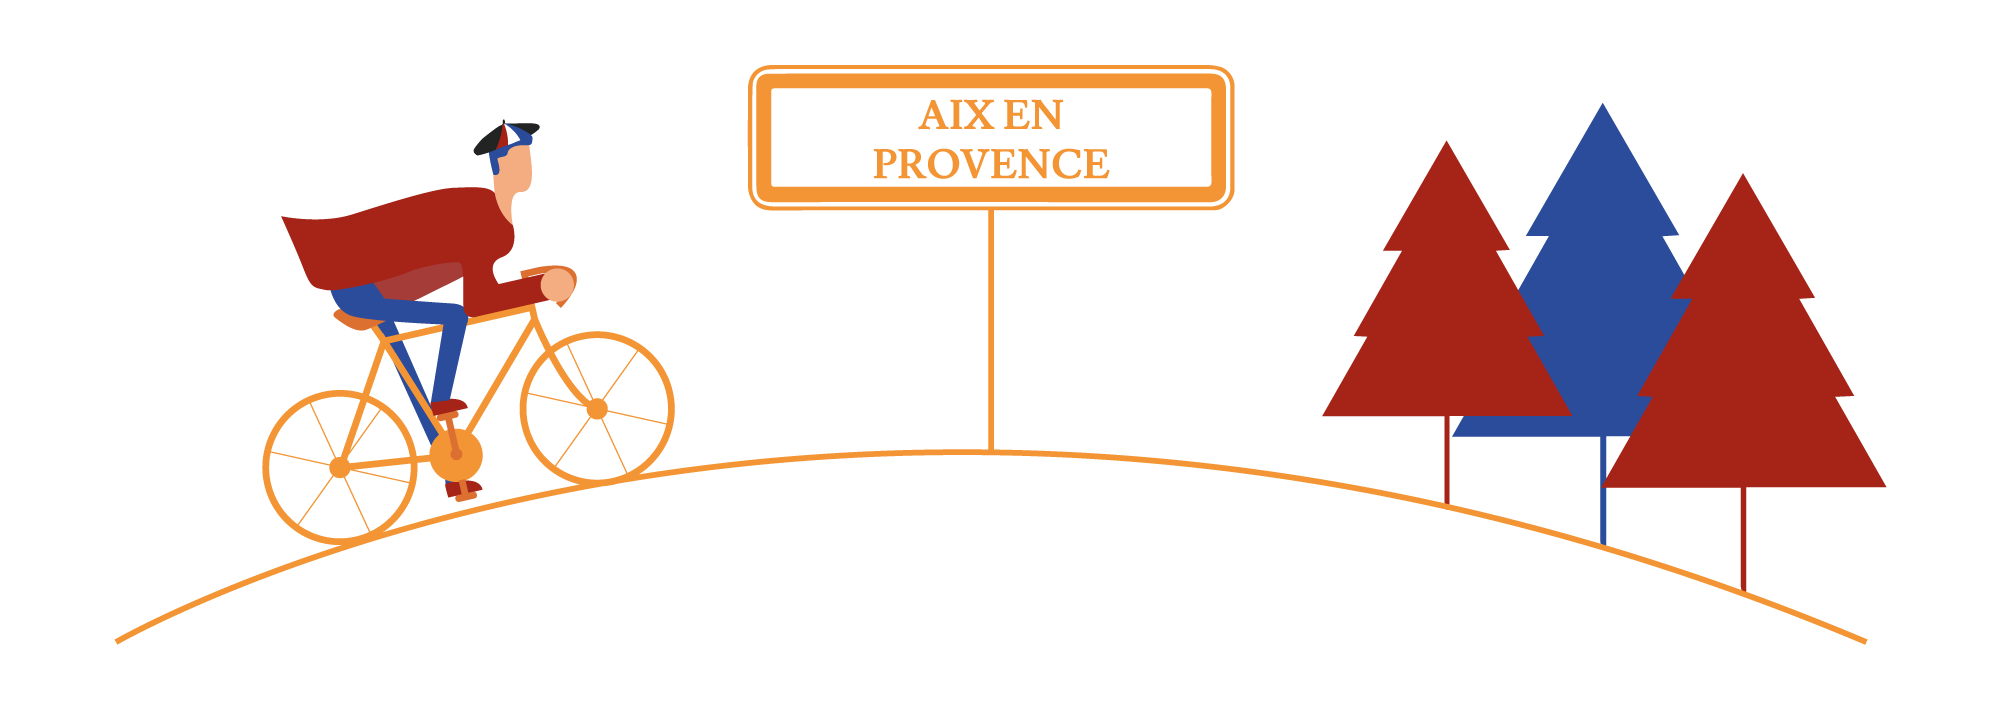 Spécialités d'Aix-en-Provence